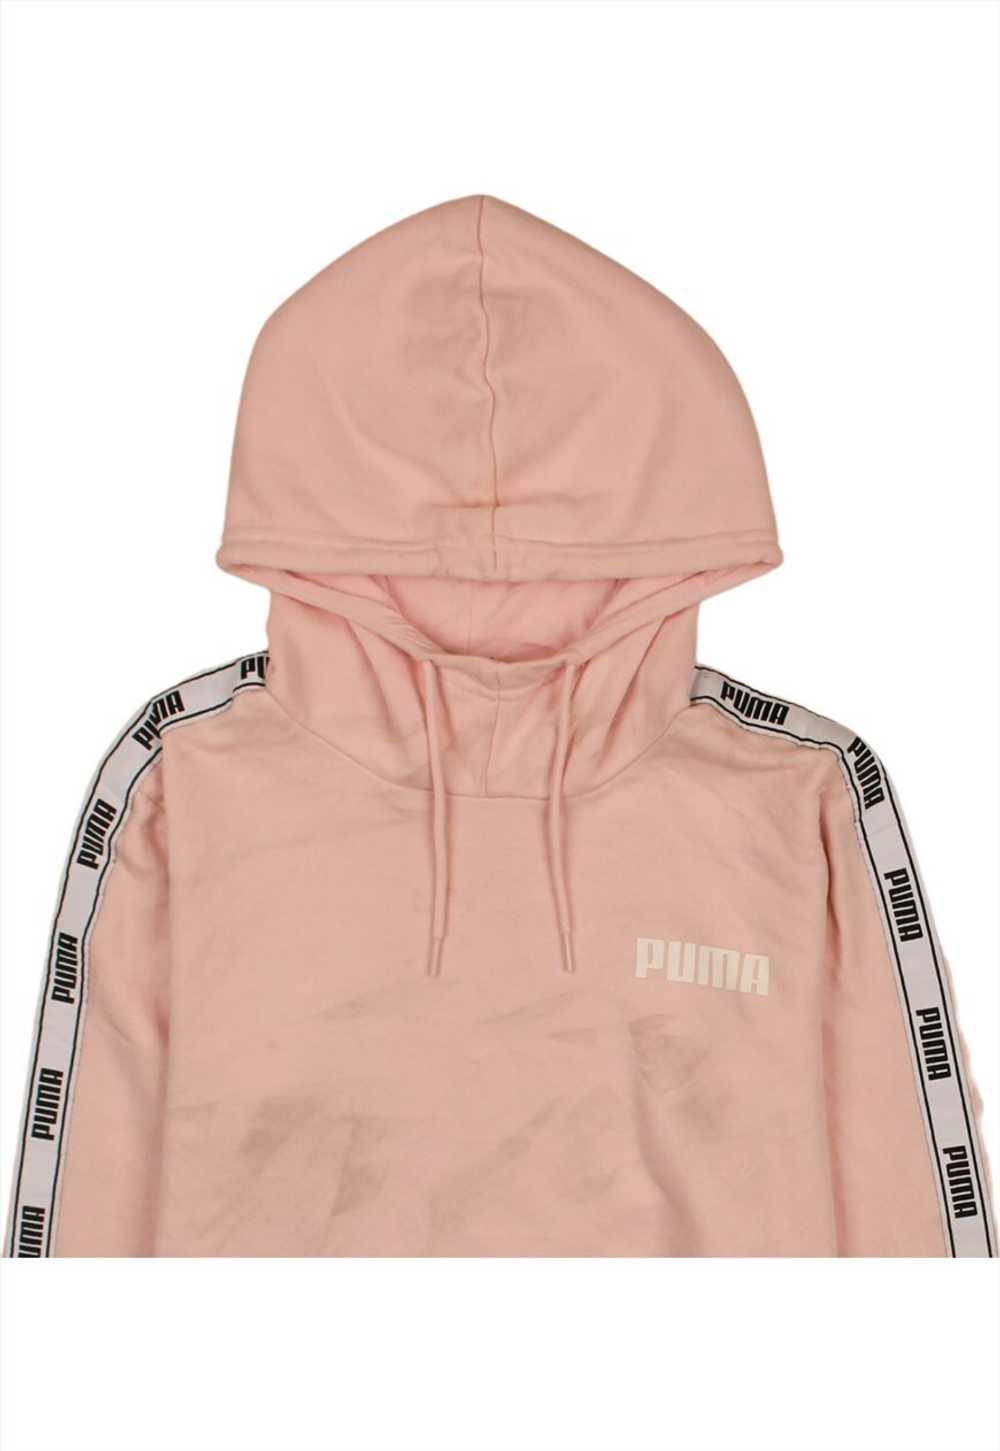 Vintage 90's Puma Hoodie Pullover Pink Medium - image 3